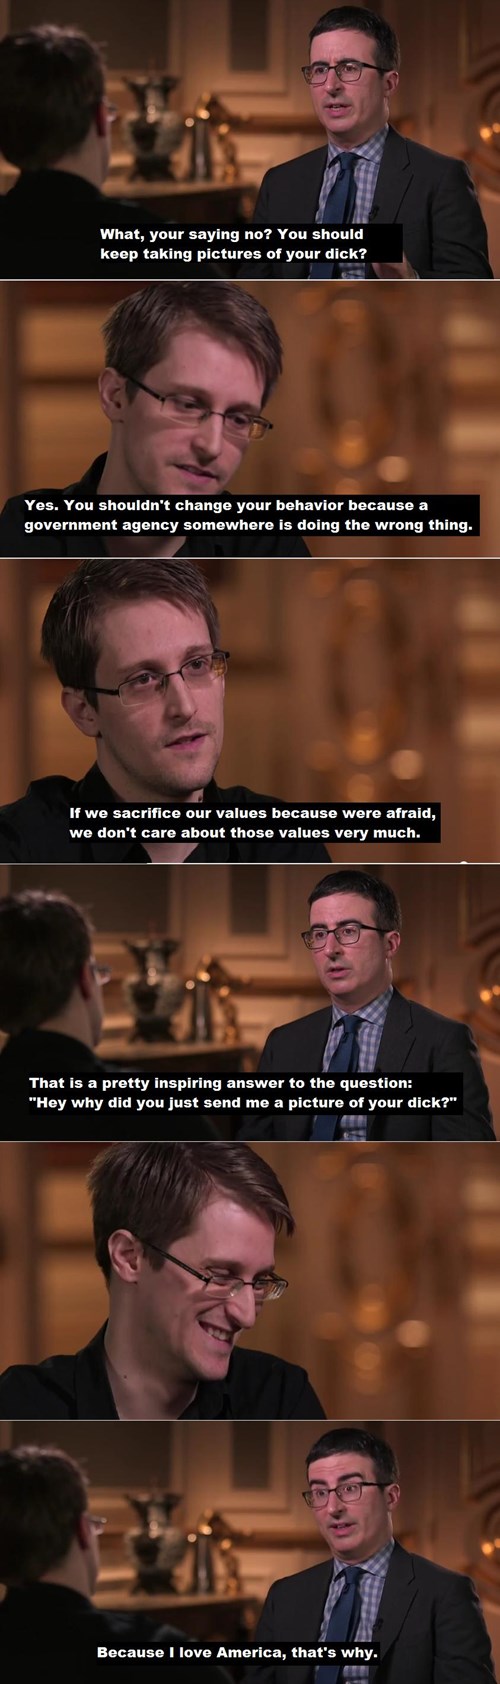 Edward Snowden Talks About Dck Pics Dating Fails Dating Memes Dating Fails Fail Memes 